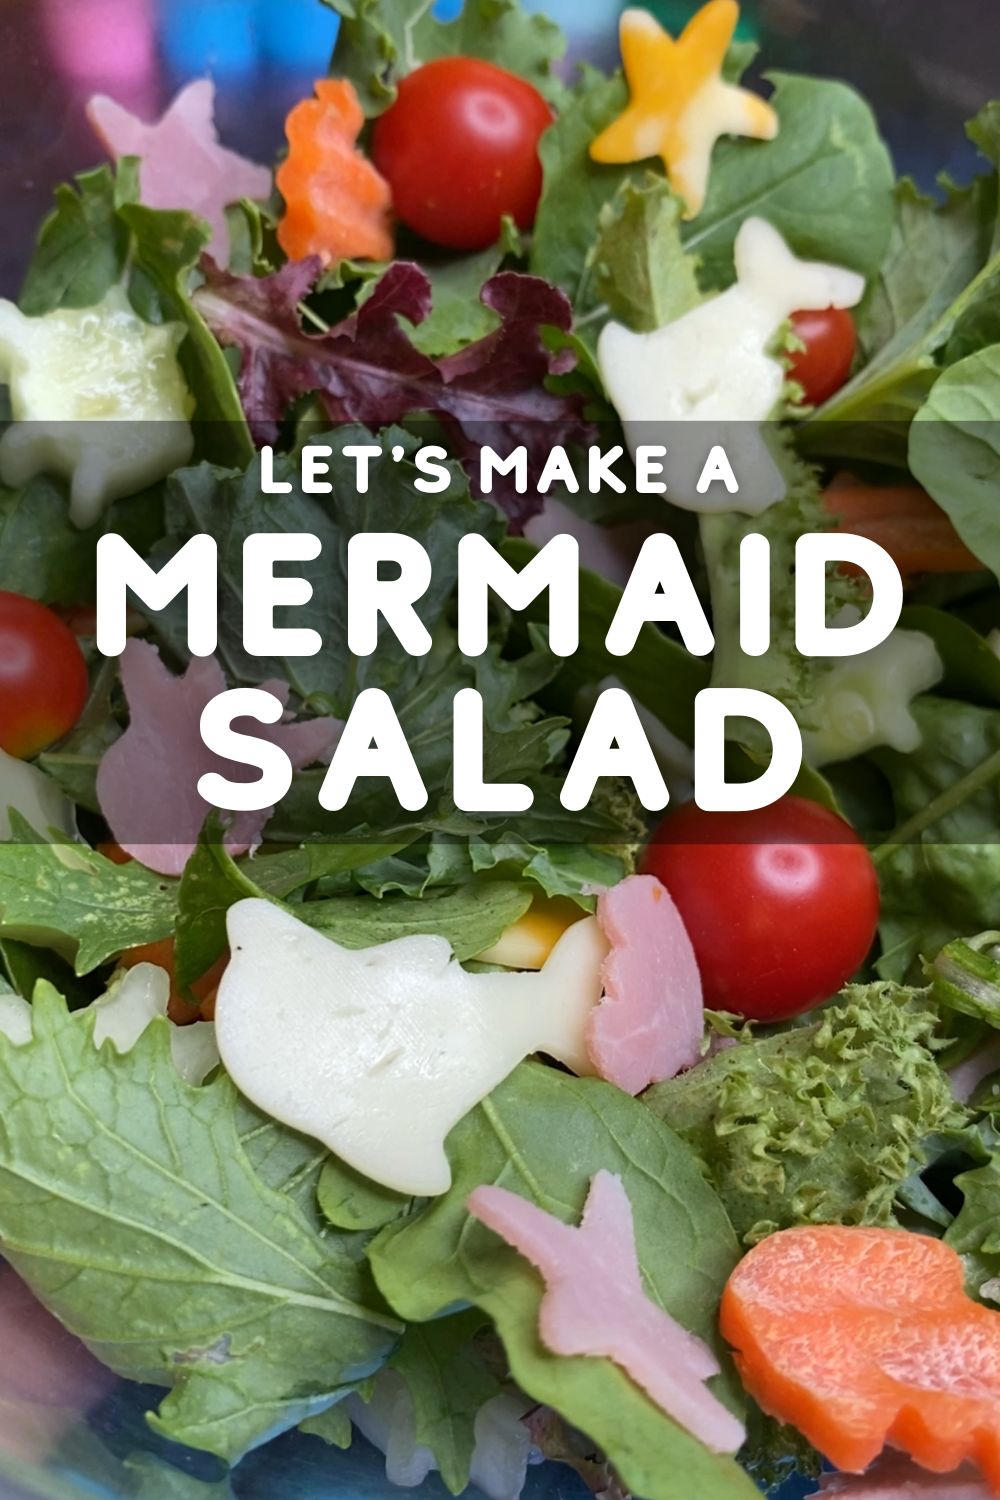 Let's make a mermaid salad recipe!